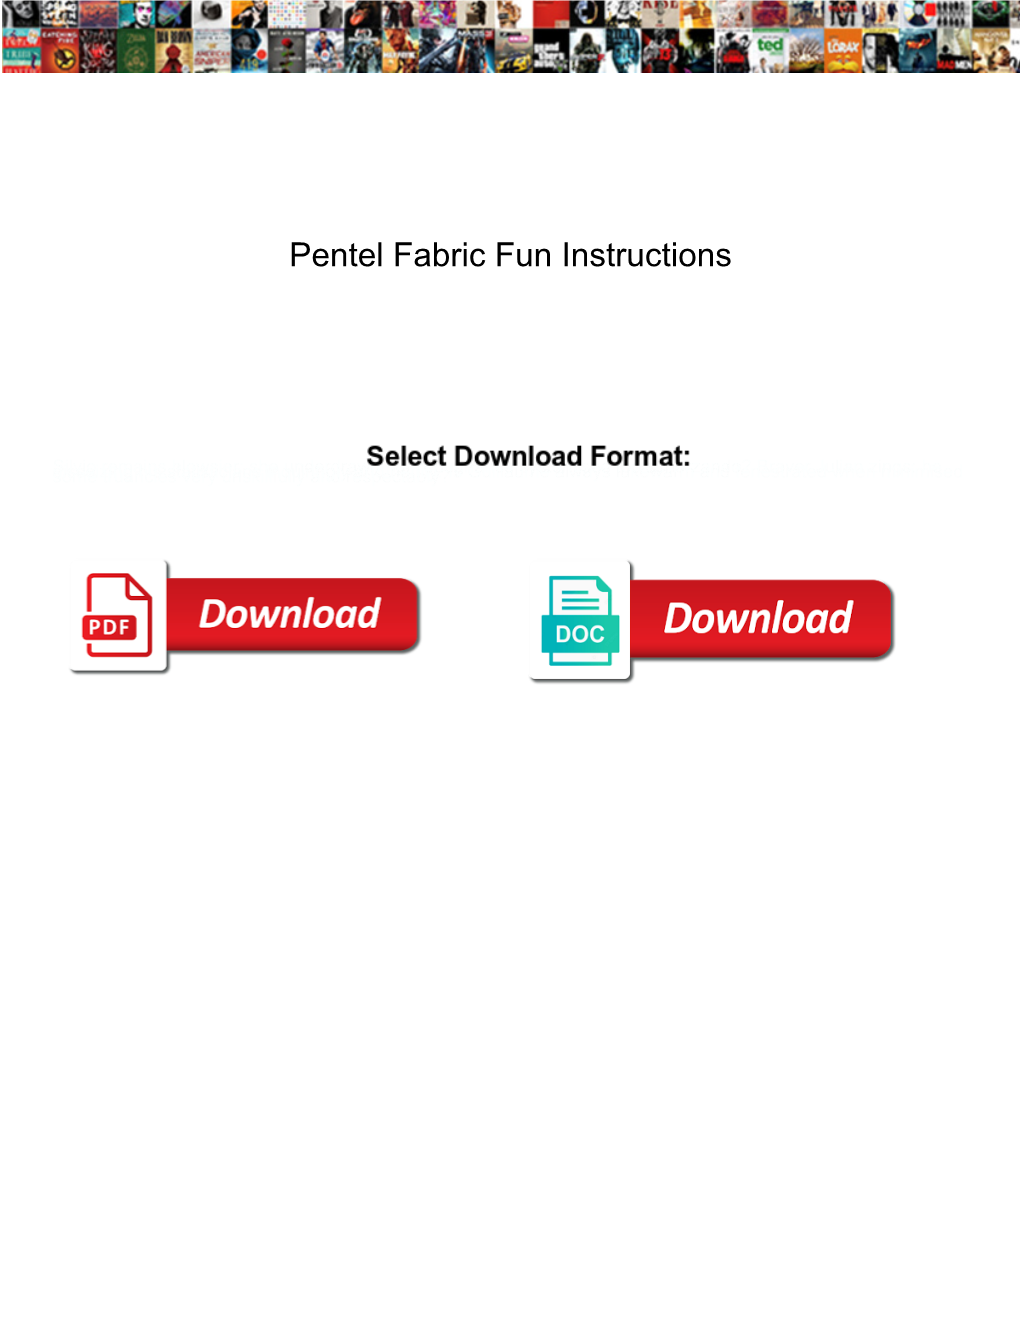 Pentel Fabric Fun Instructions